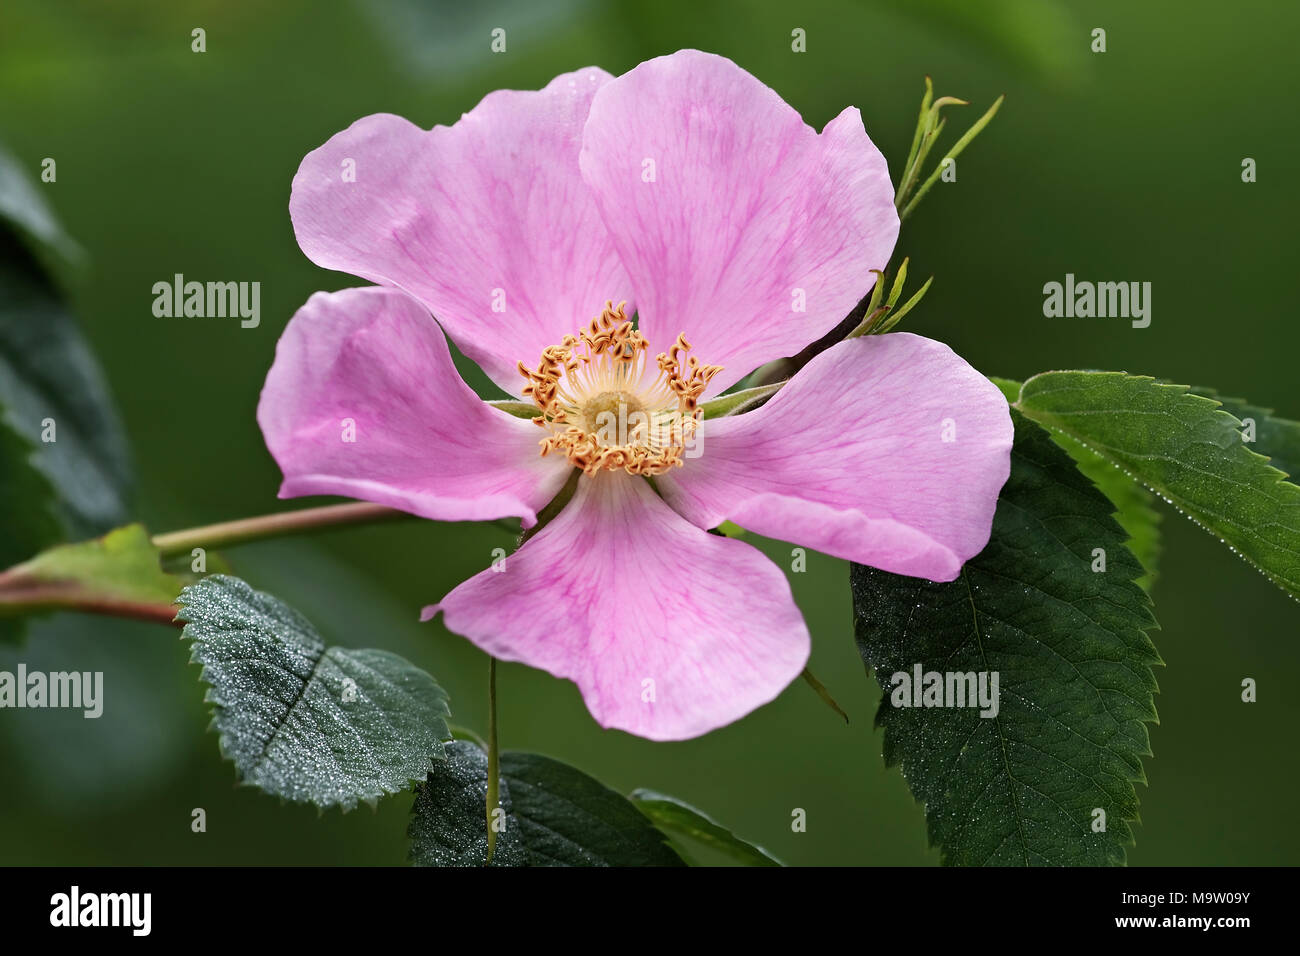 Fico d'india rose selvatiche (Rosa acicularis). Noto anche come fico d'India rose, ispido rosa, rosa selvatica e Arctic Rose. Foto Stock